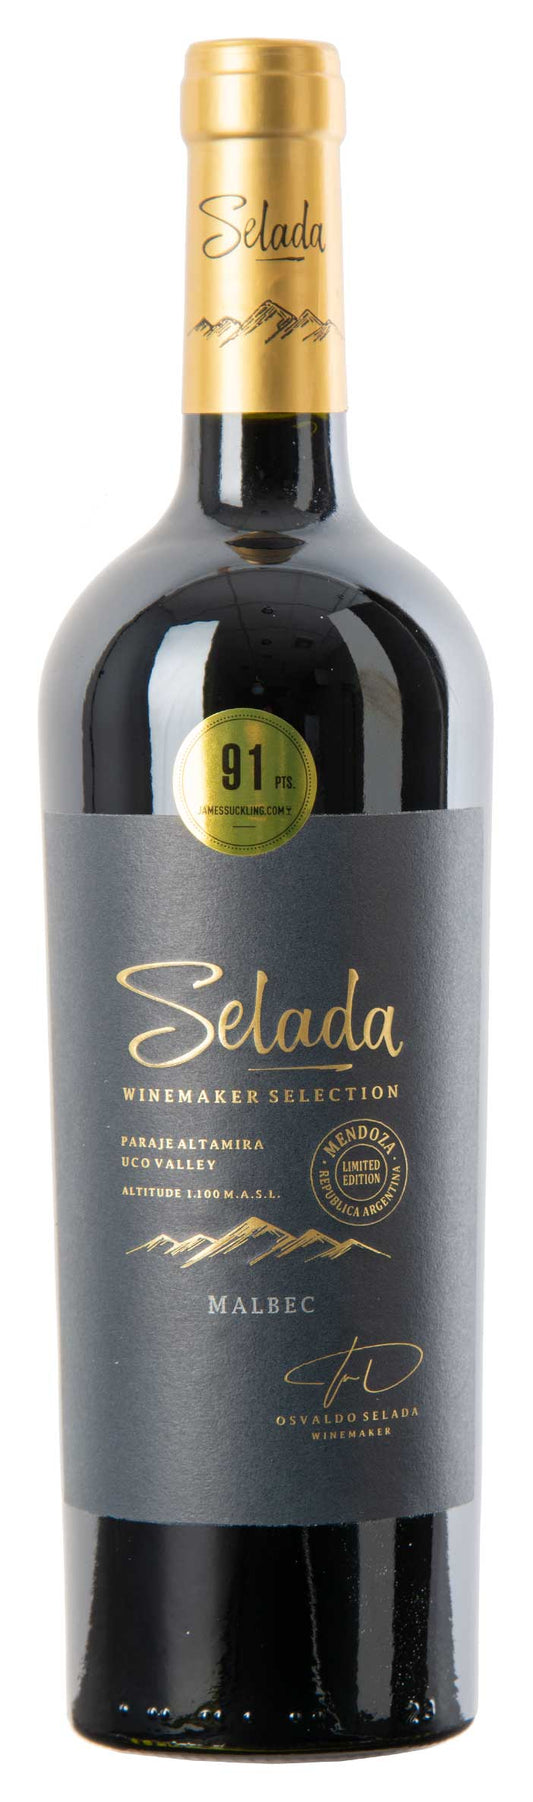 Selada Winemaker Selection Malbec